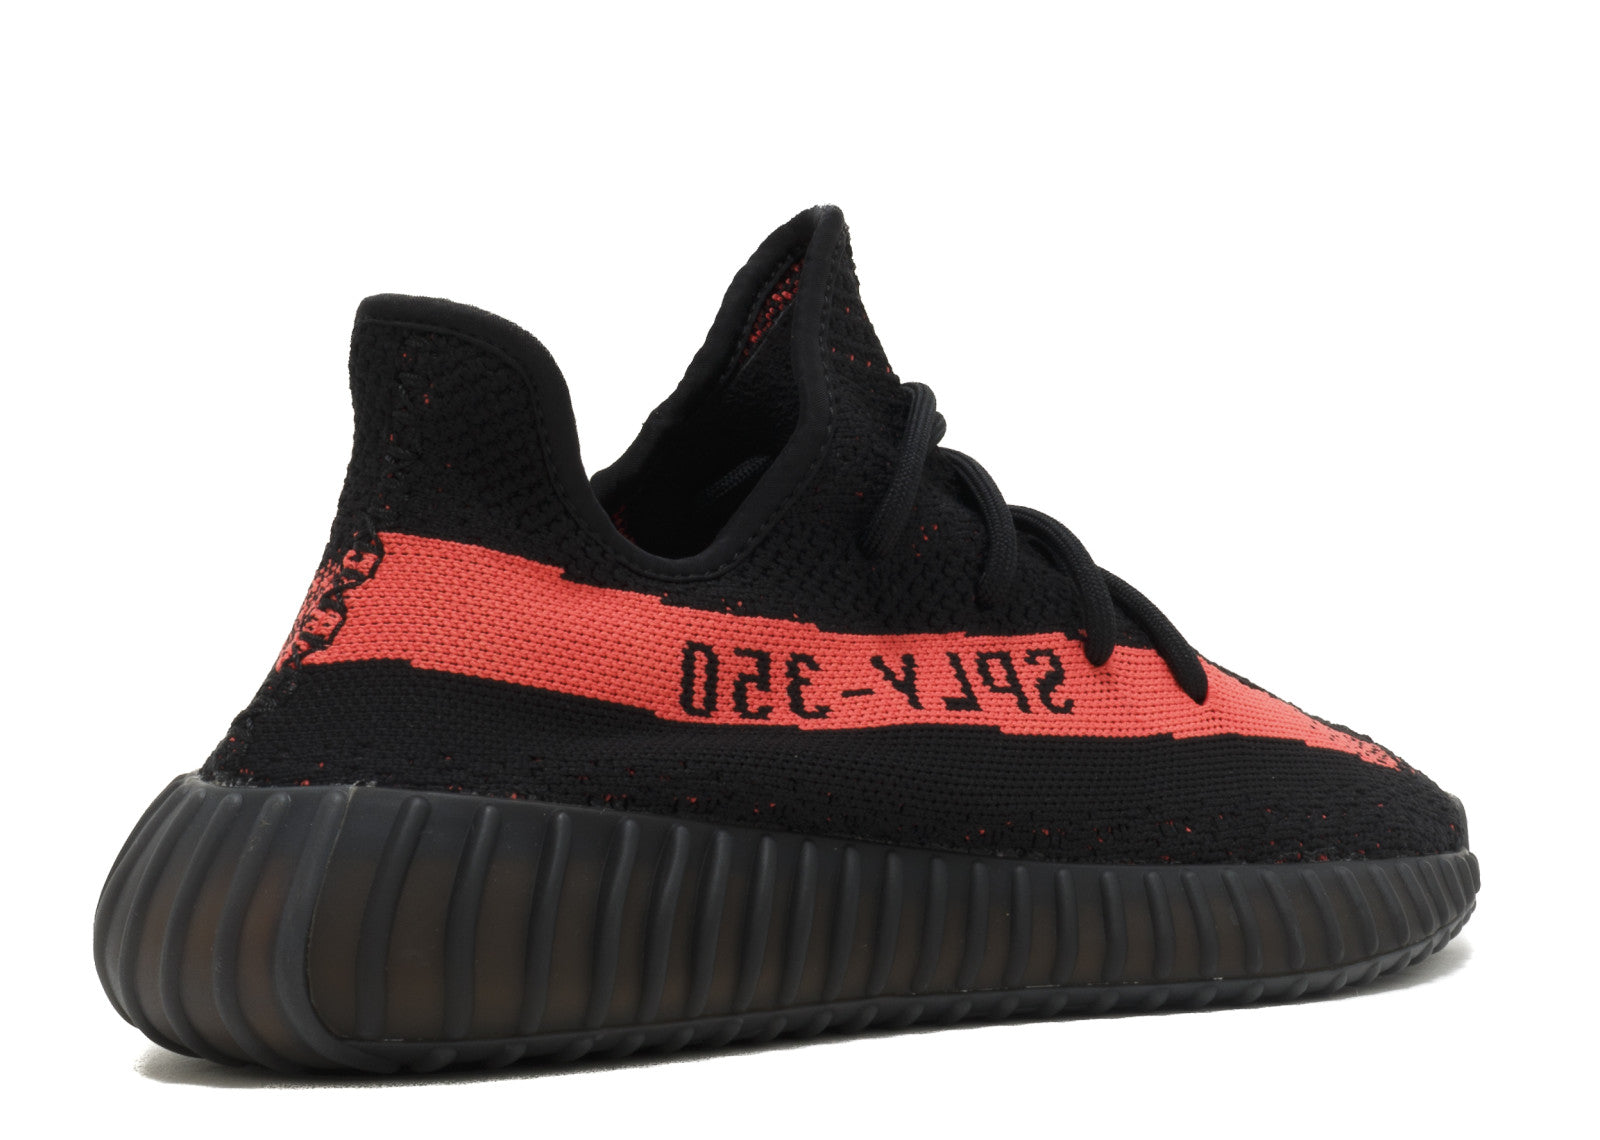 Cheap 2019 Adidas Yeezy Boost 350 V2 Kanye West Triple Black Static Fu9006 500 700 10